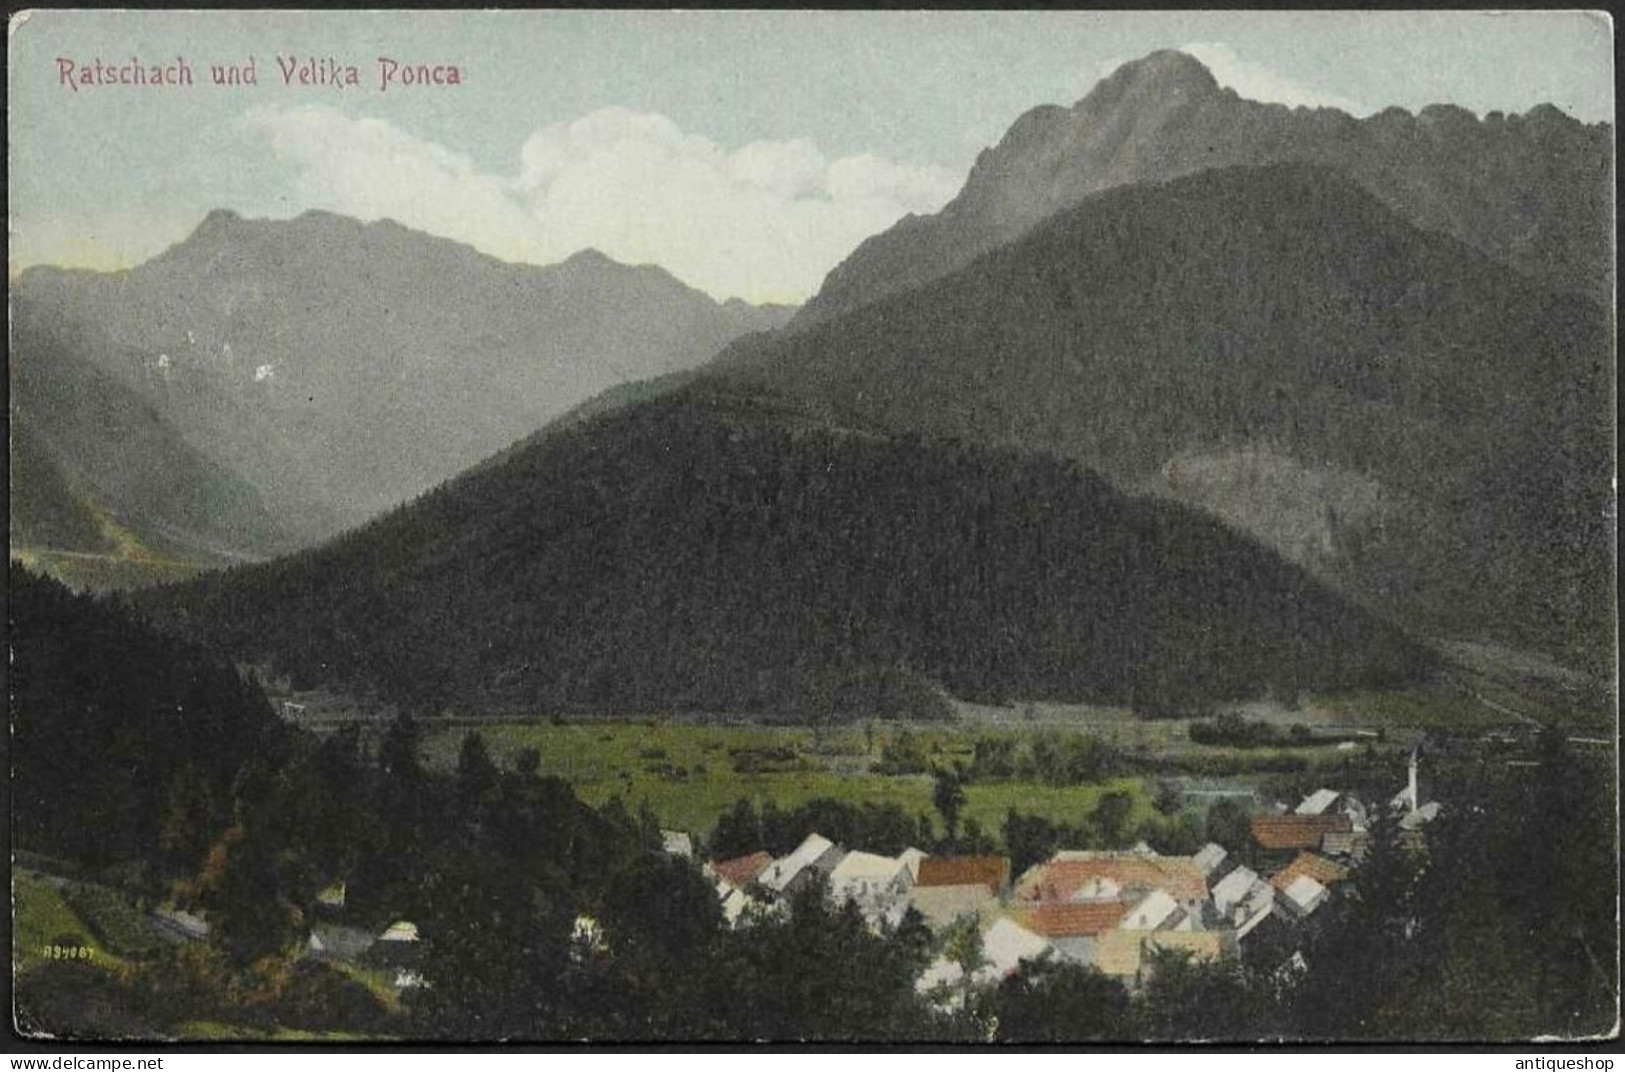 Slovenia-----Ratece-----old Postcard - Slovenia